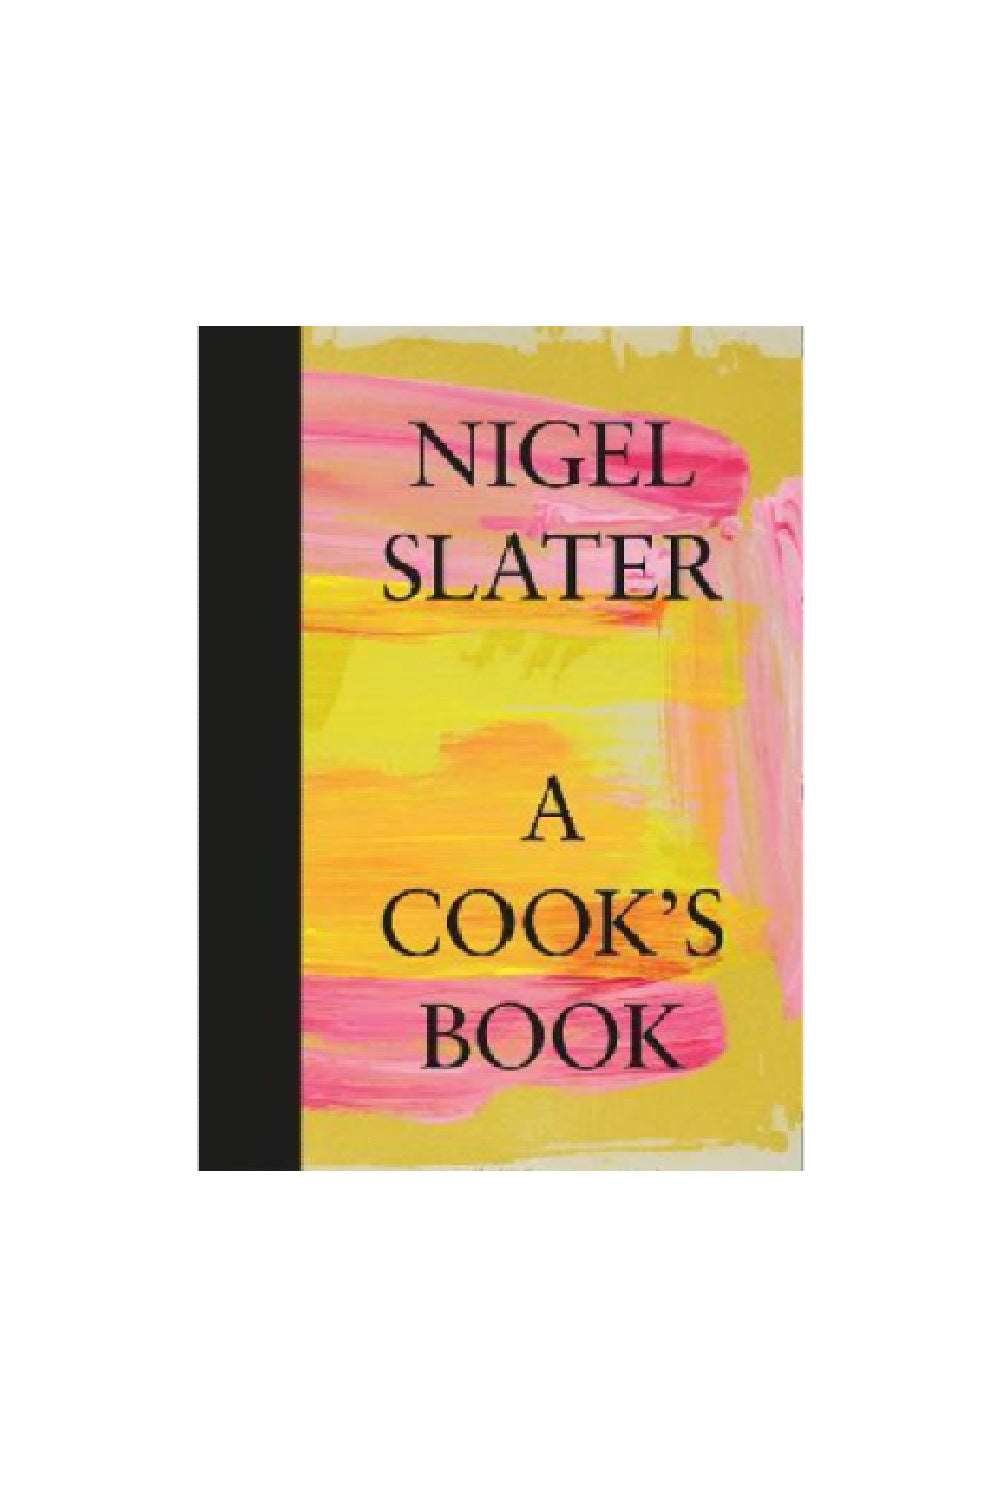 A Cook's Book / NIGEL SLATER